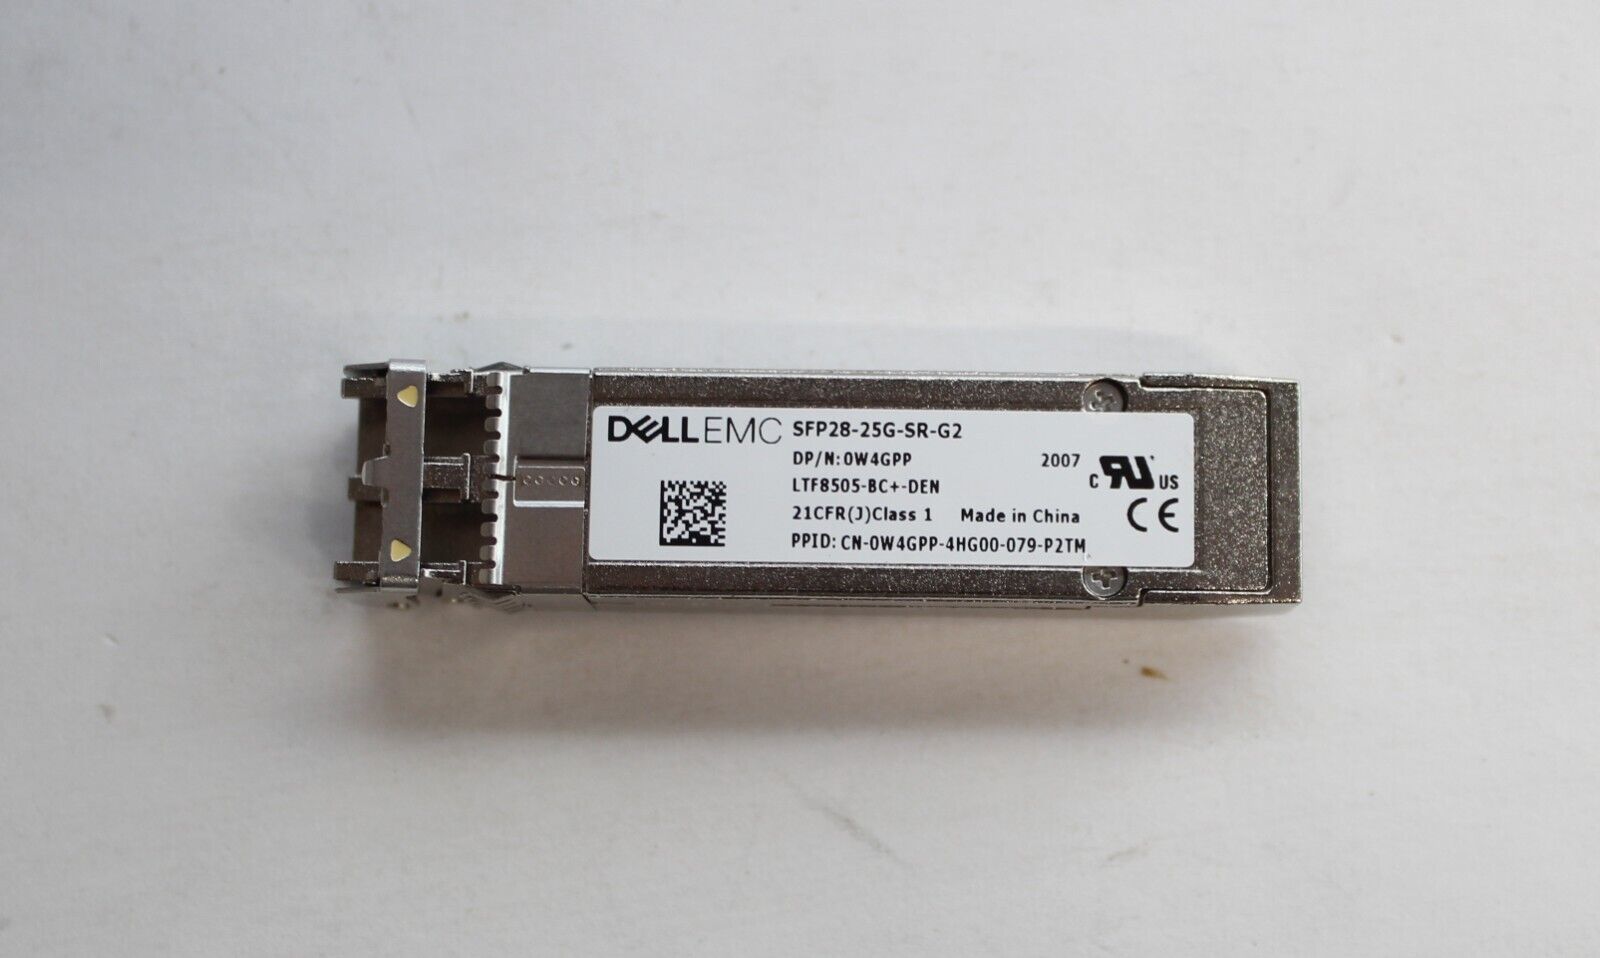 Dell EMC SFP 25GB SFP28-25G-SR-G2 LTF8505-BC+-DEN Optical Transciever W4GPP